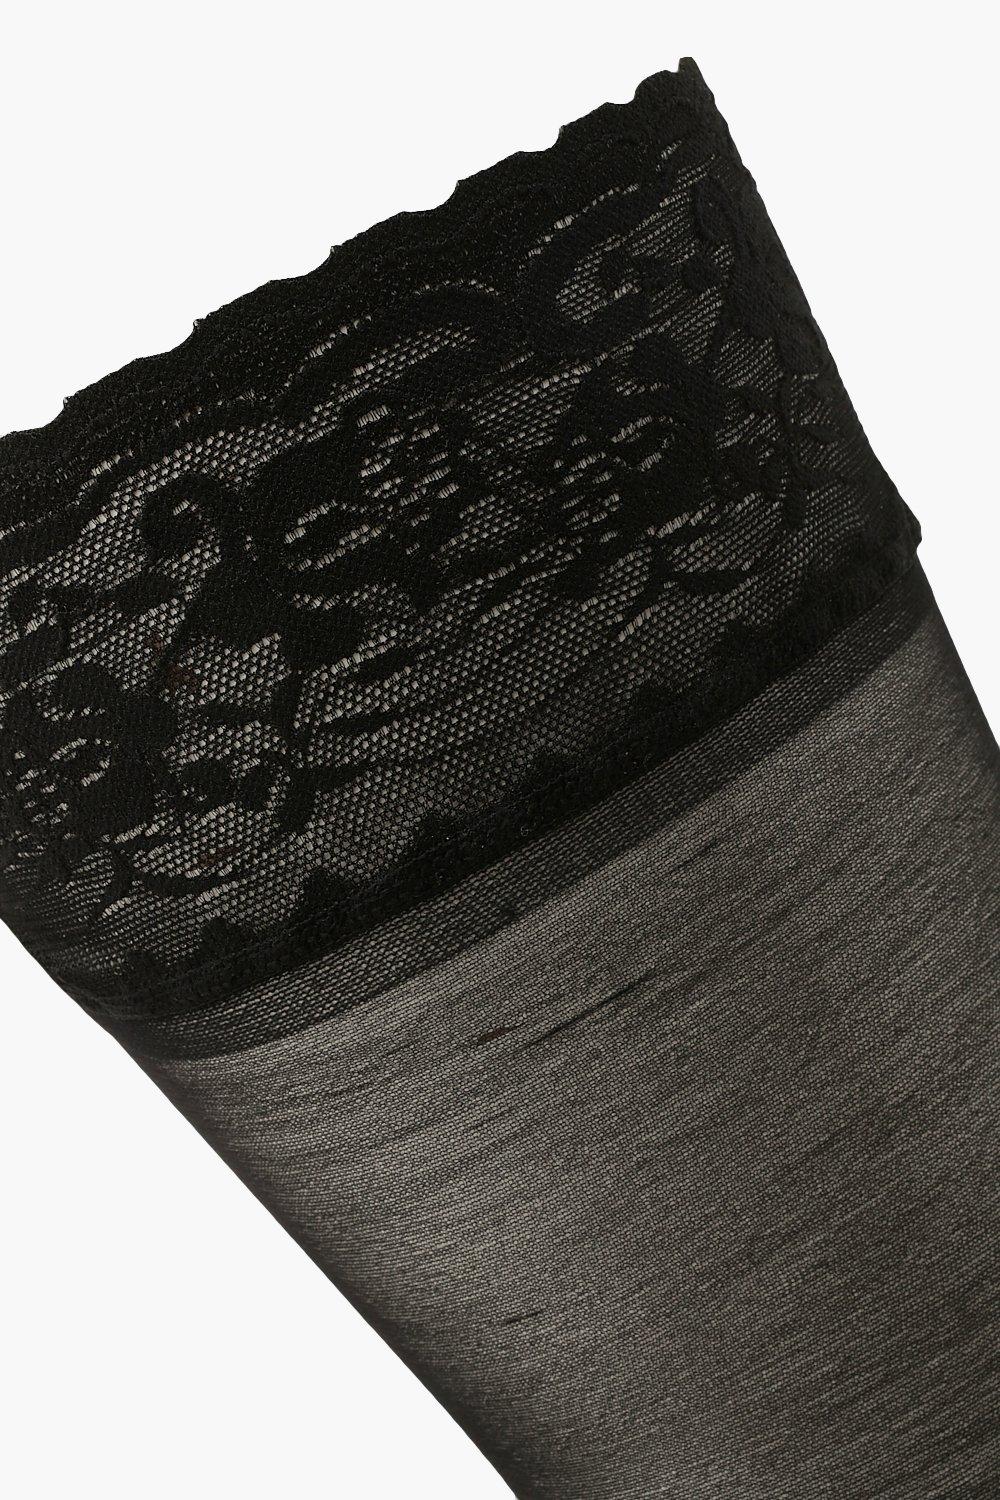  Black Lace Stockings